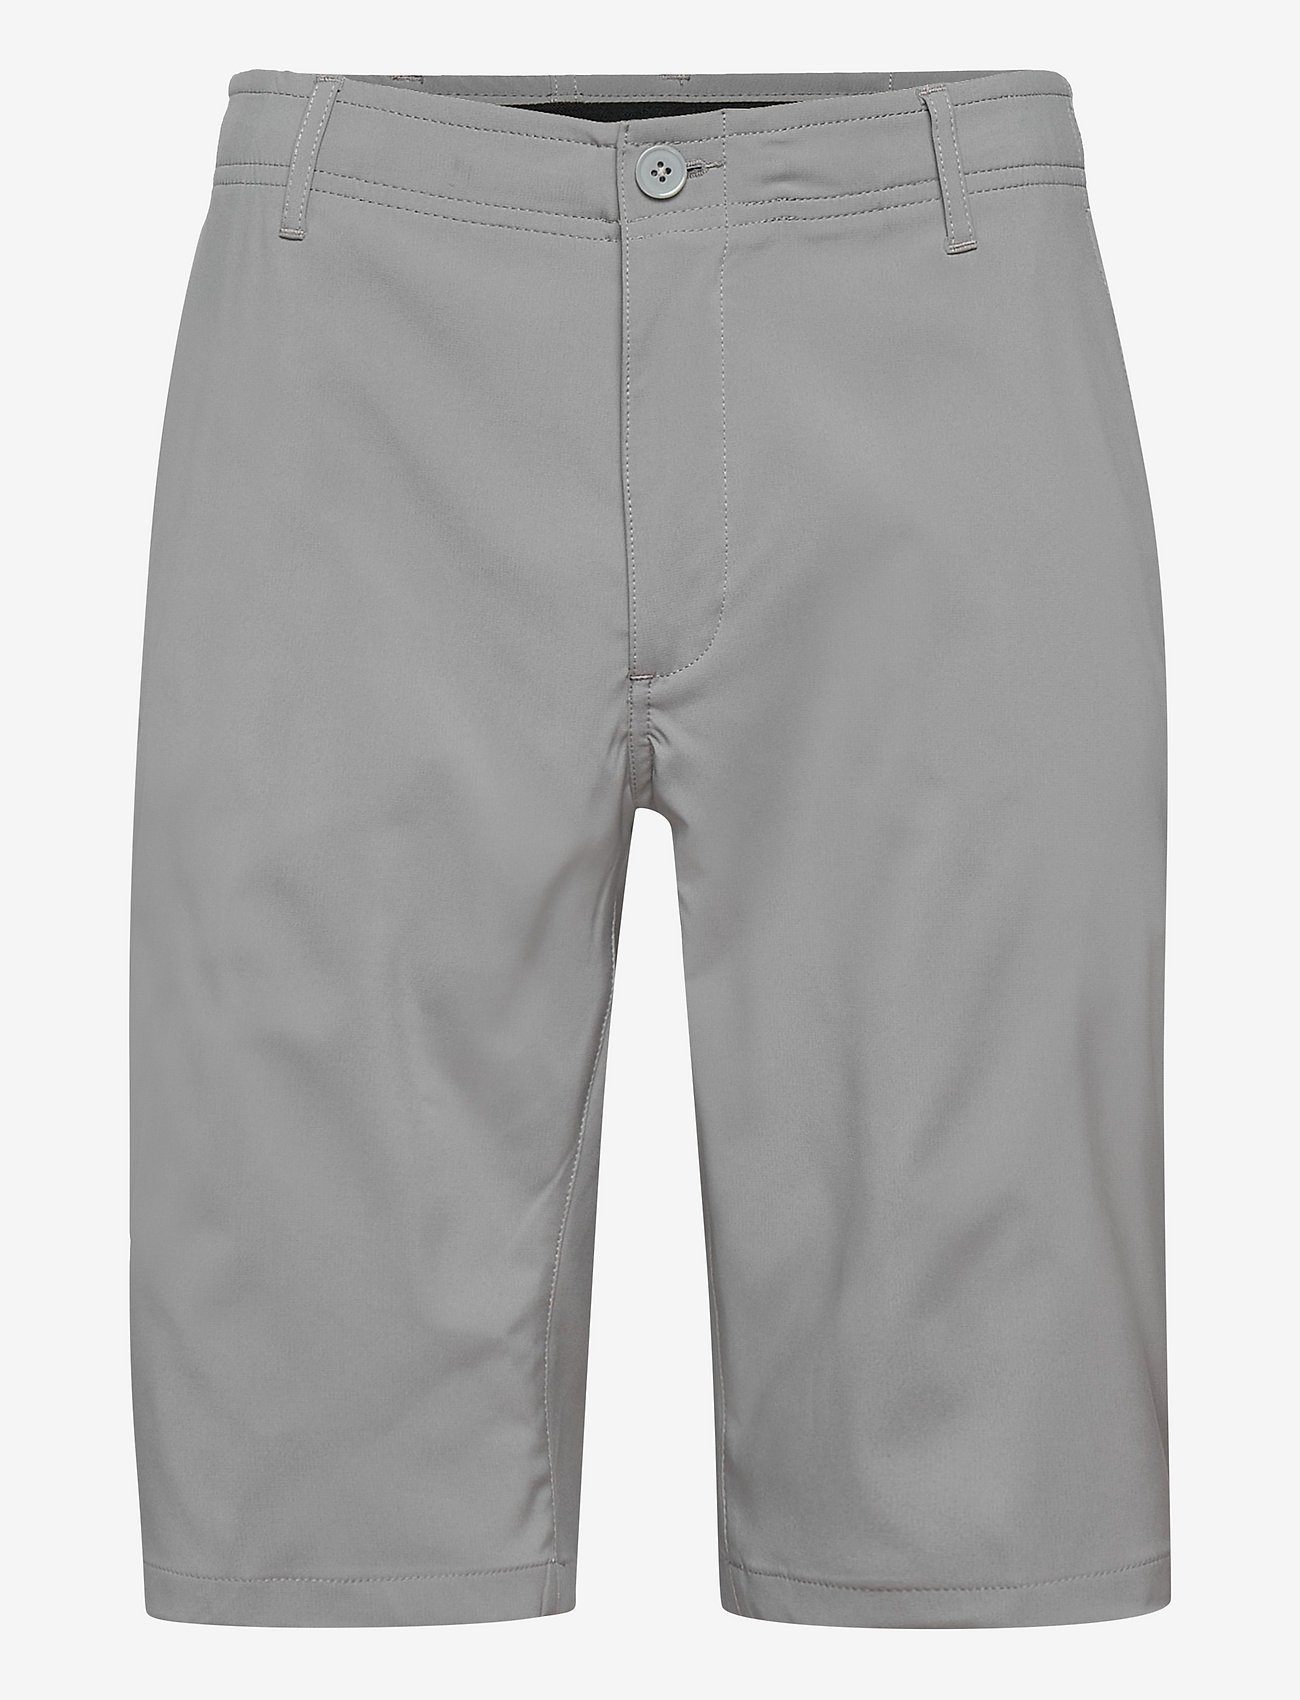 Abacus - Men Cleek flex shorts - golfshortsit - grey - 0